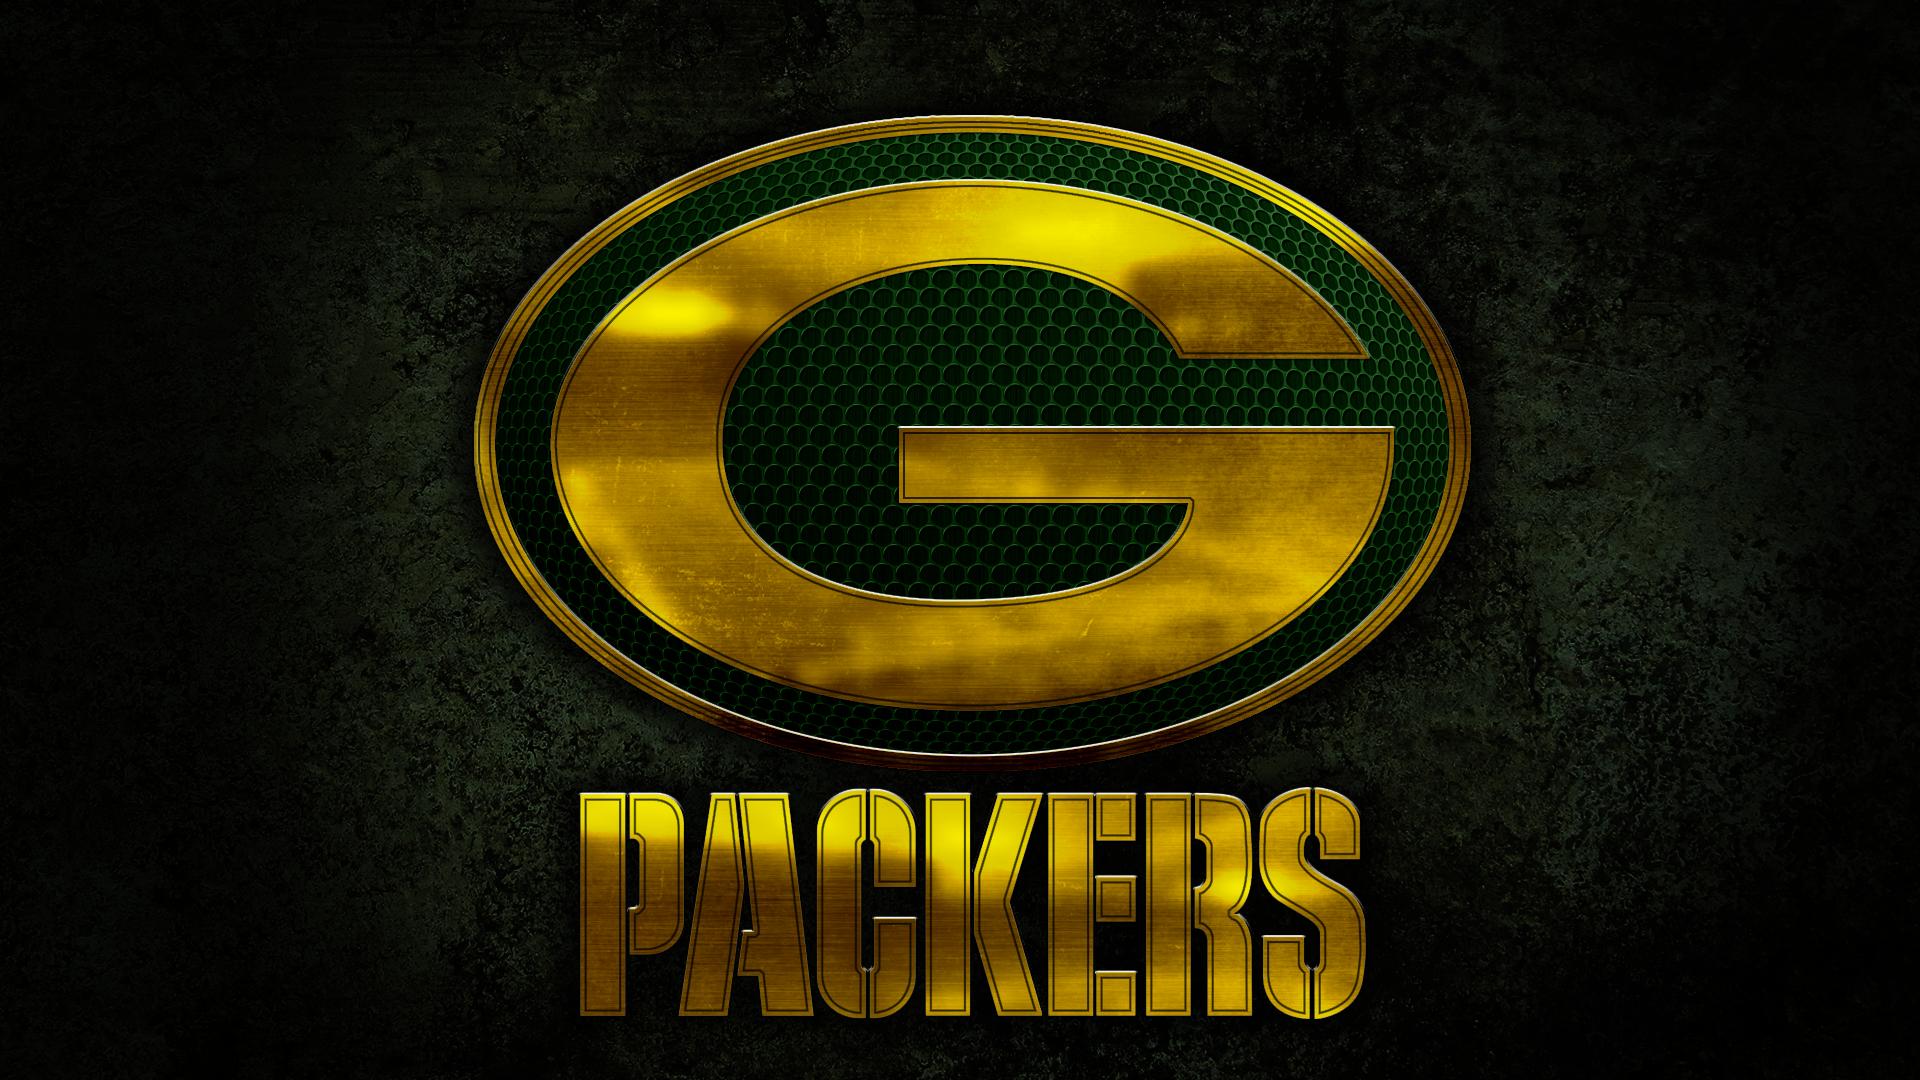 NFL Packers Wallpaper HD